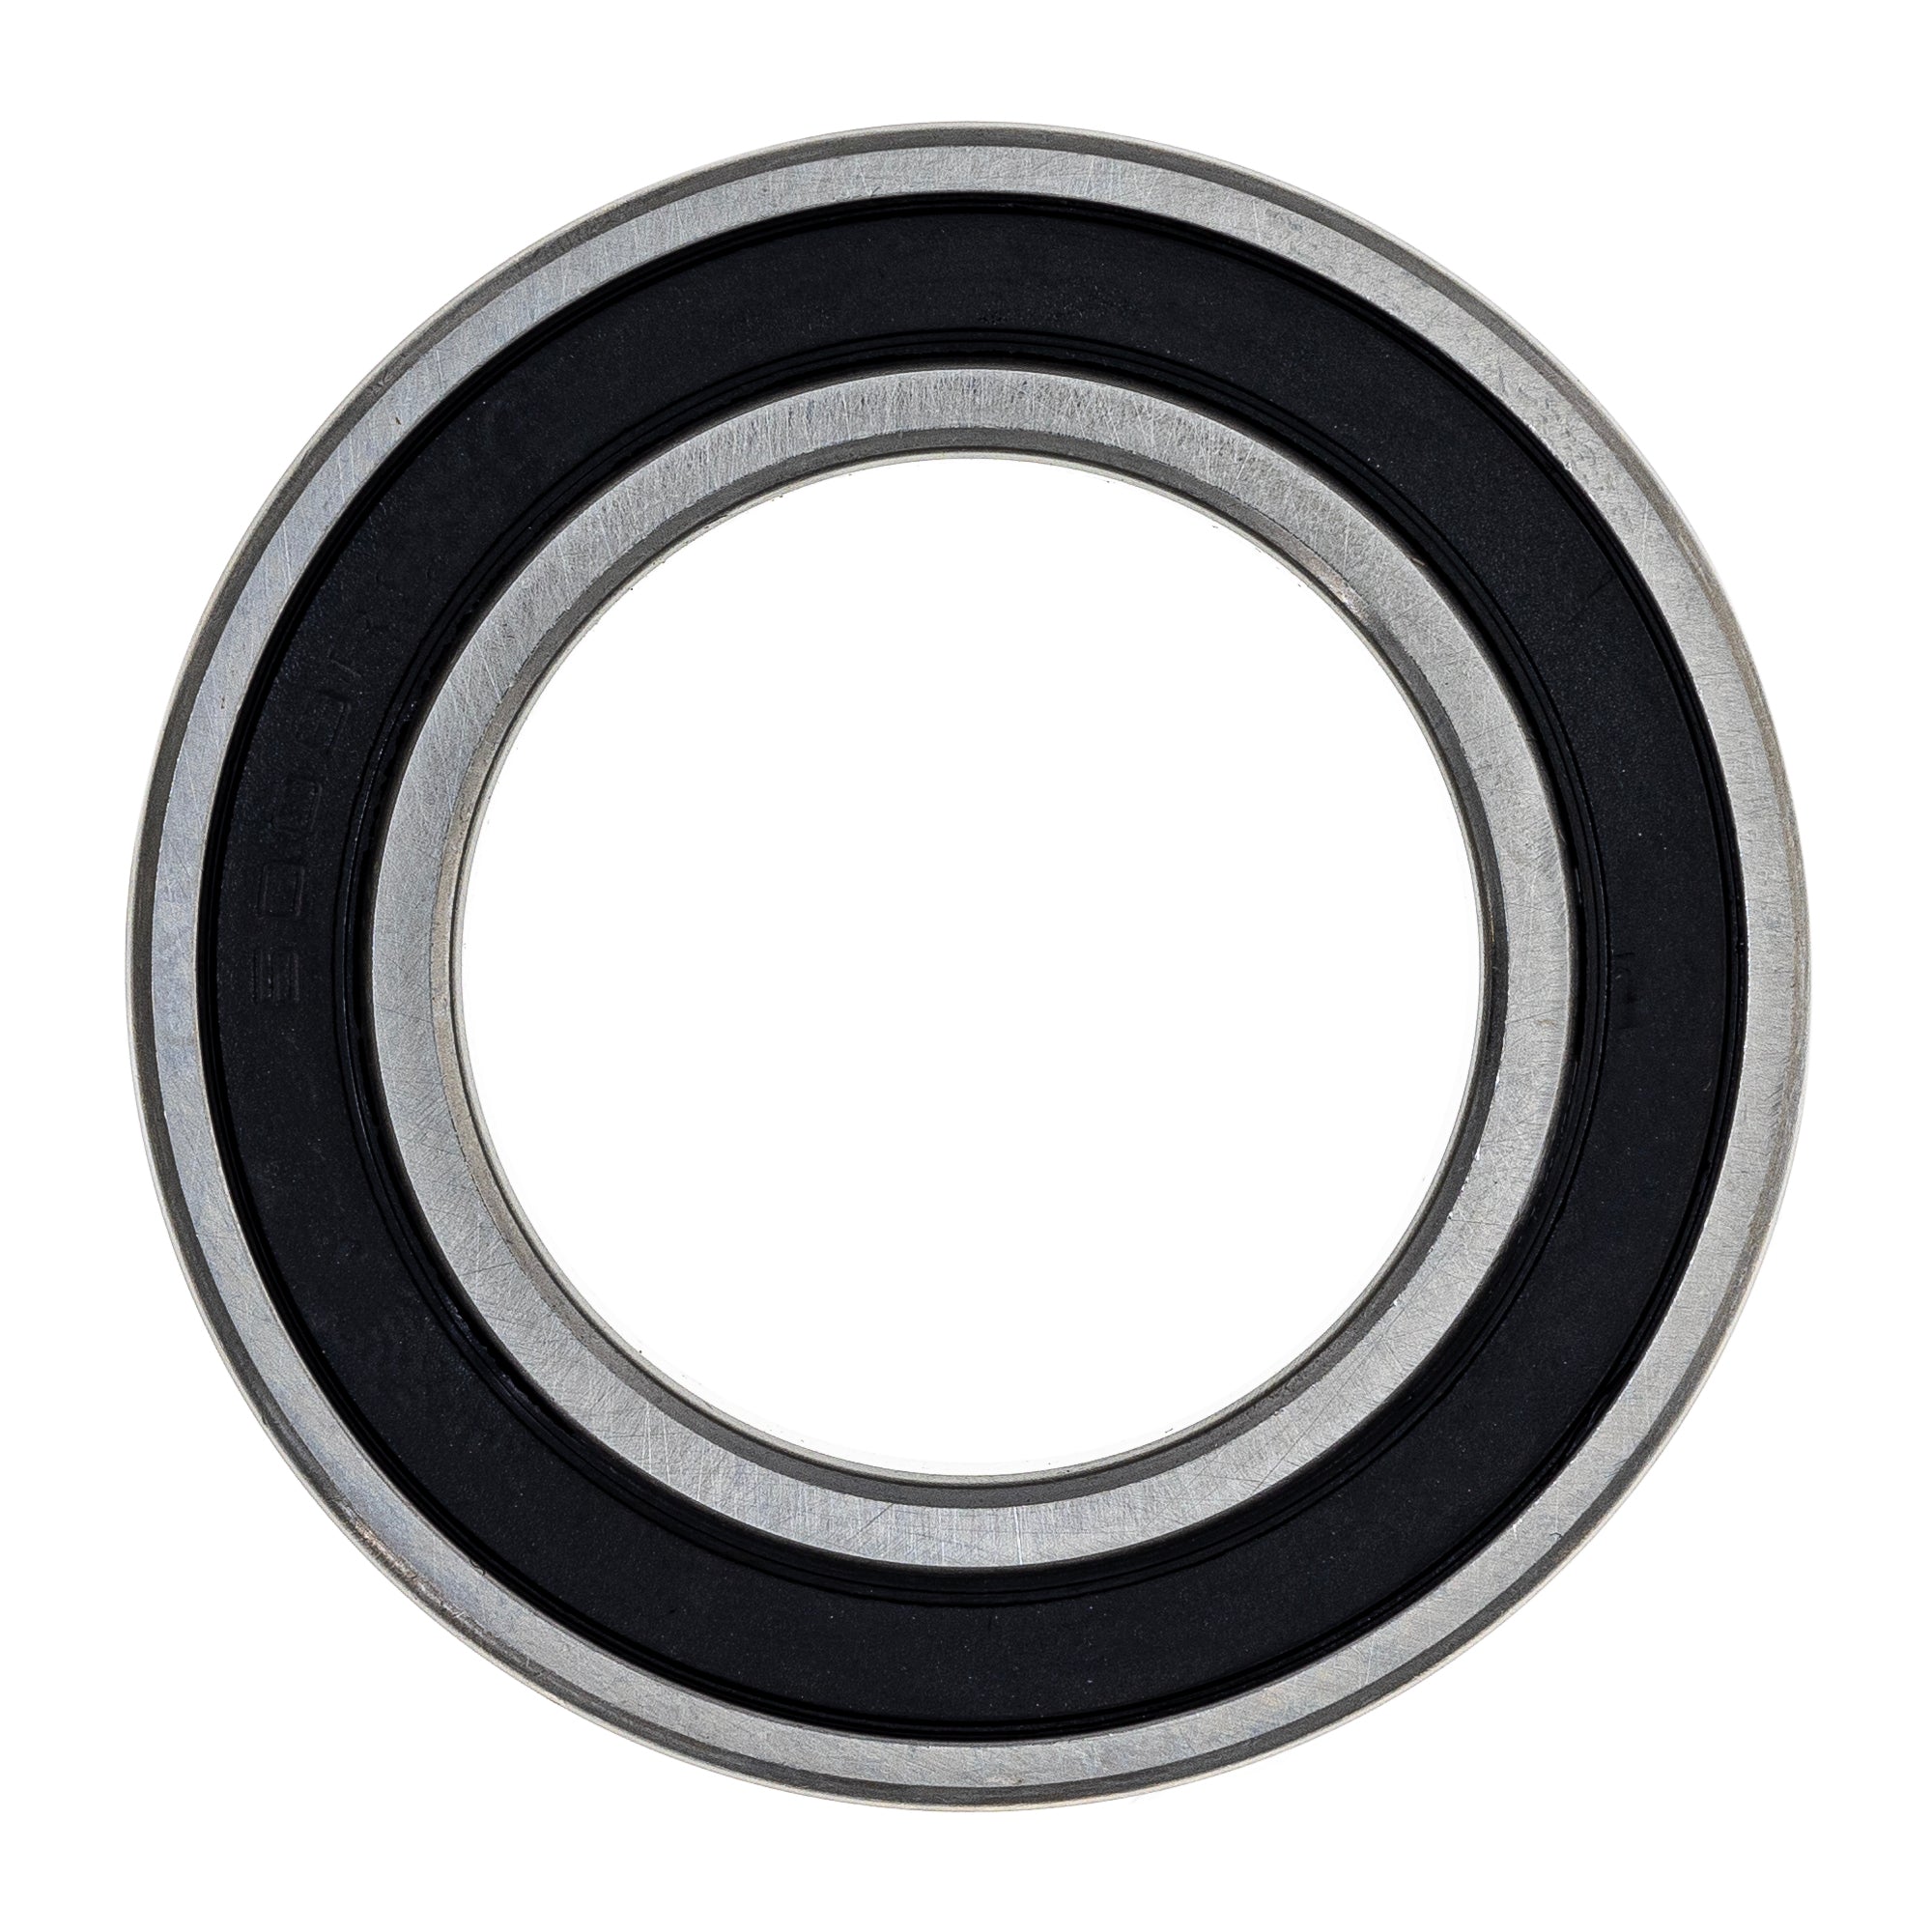 Wheel Bearing for Honda Rancher 420 96150-60090-10 45x75x16mm 2 Pack